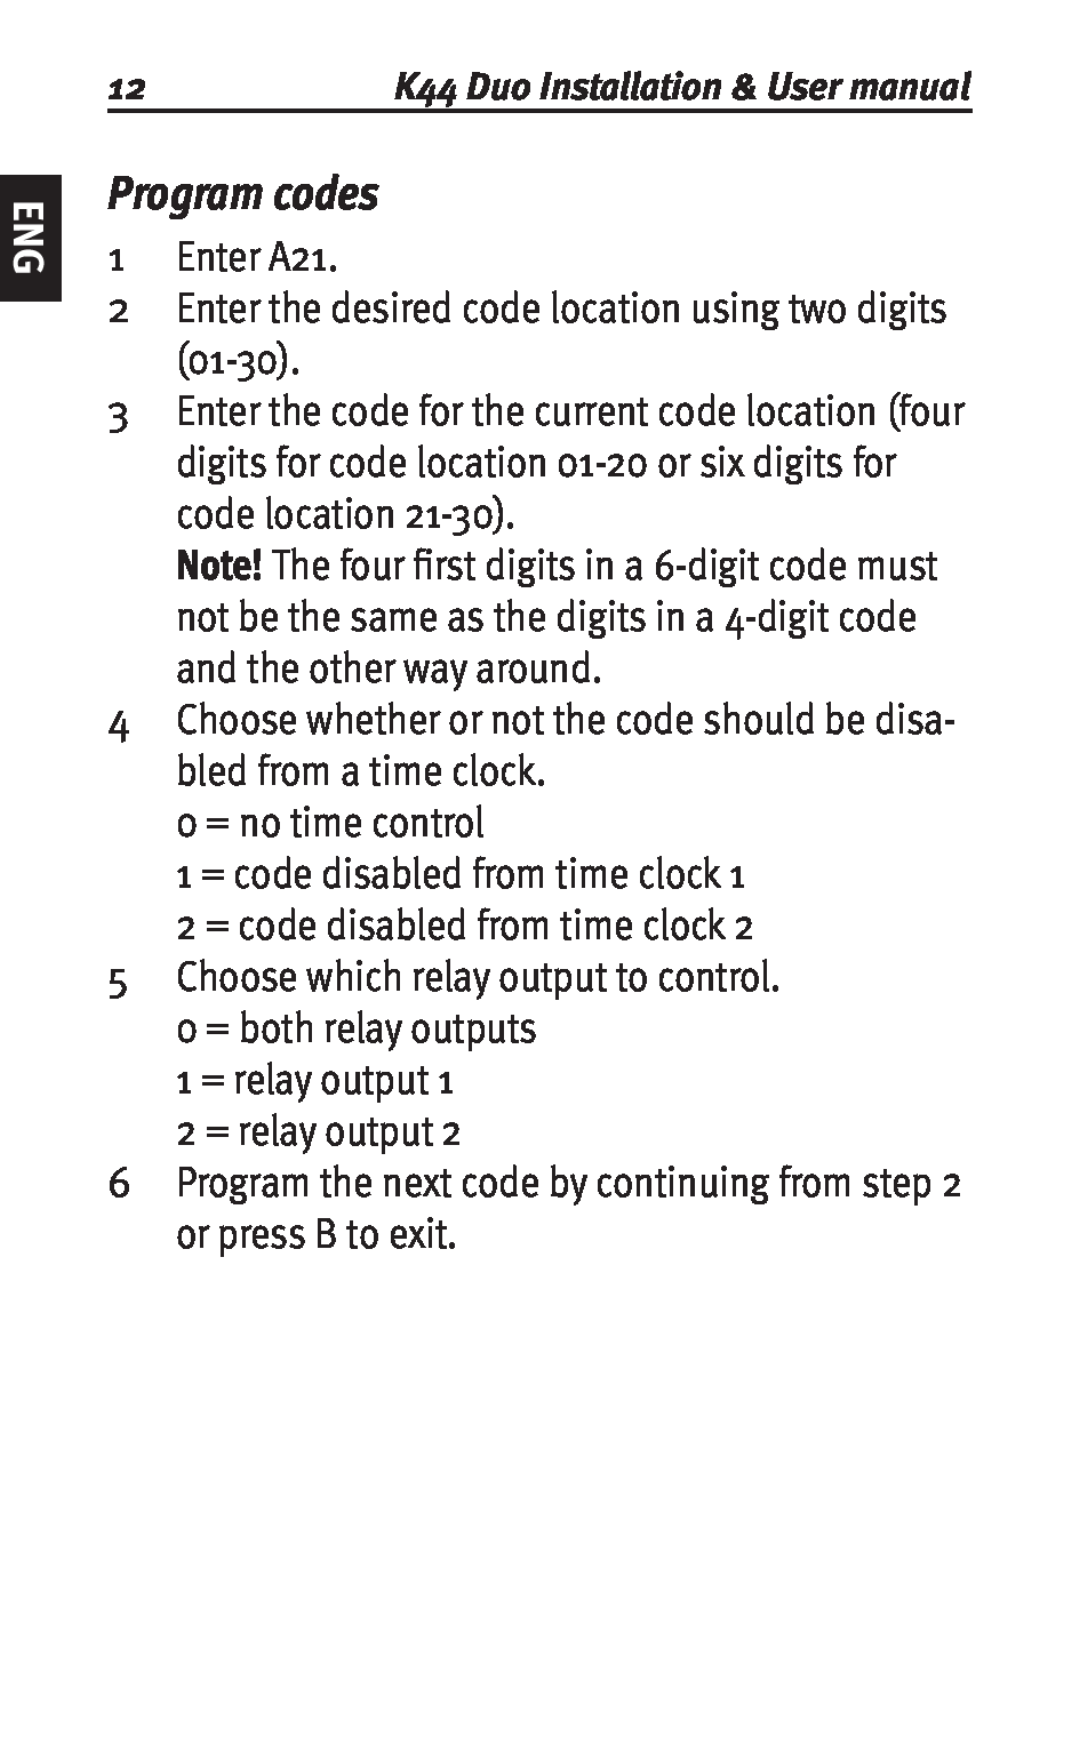 Siemens K44 user manual Program codes 